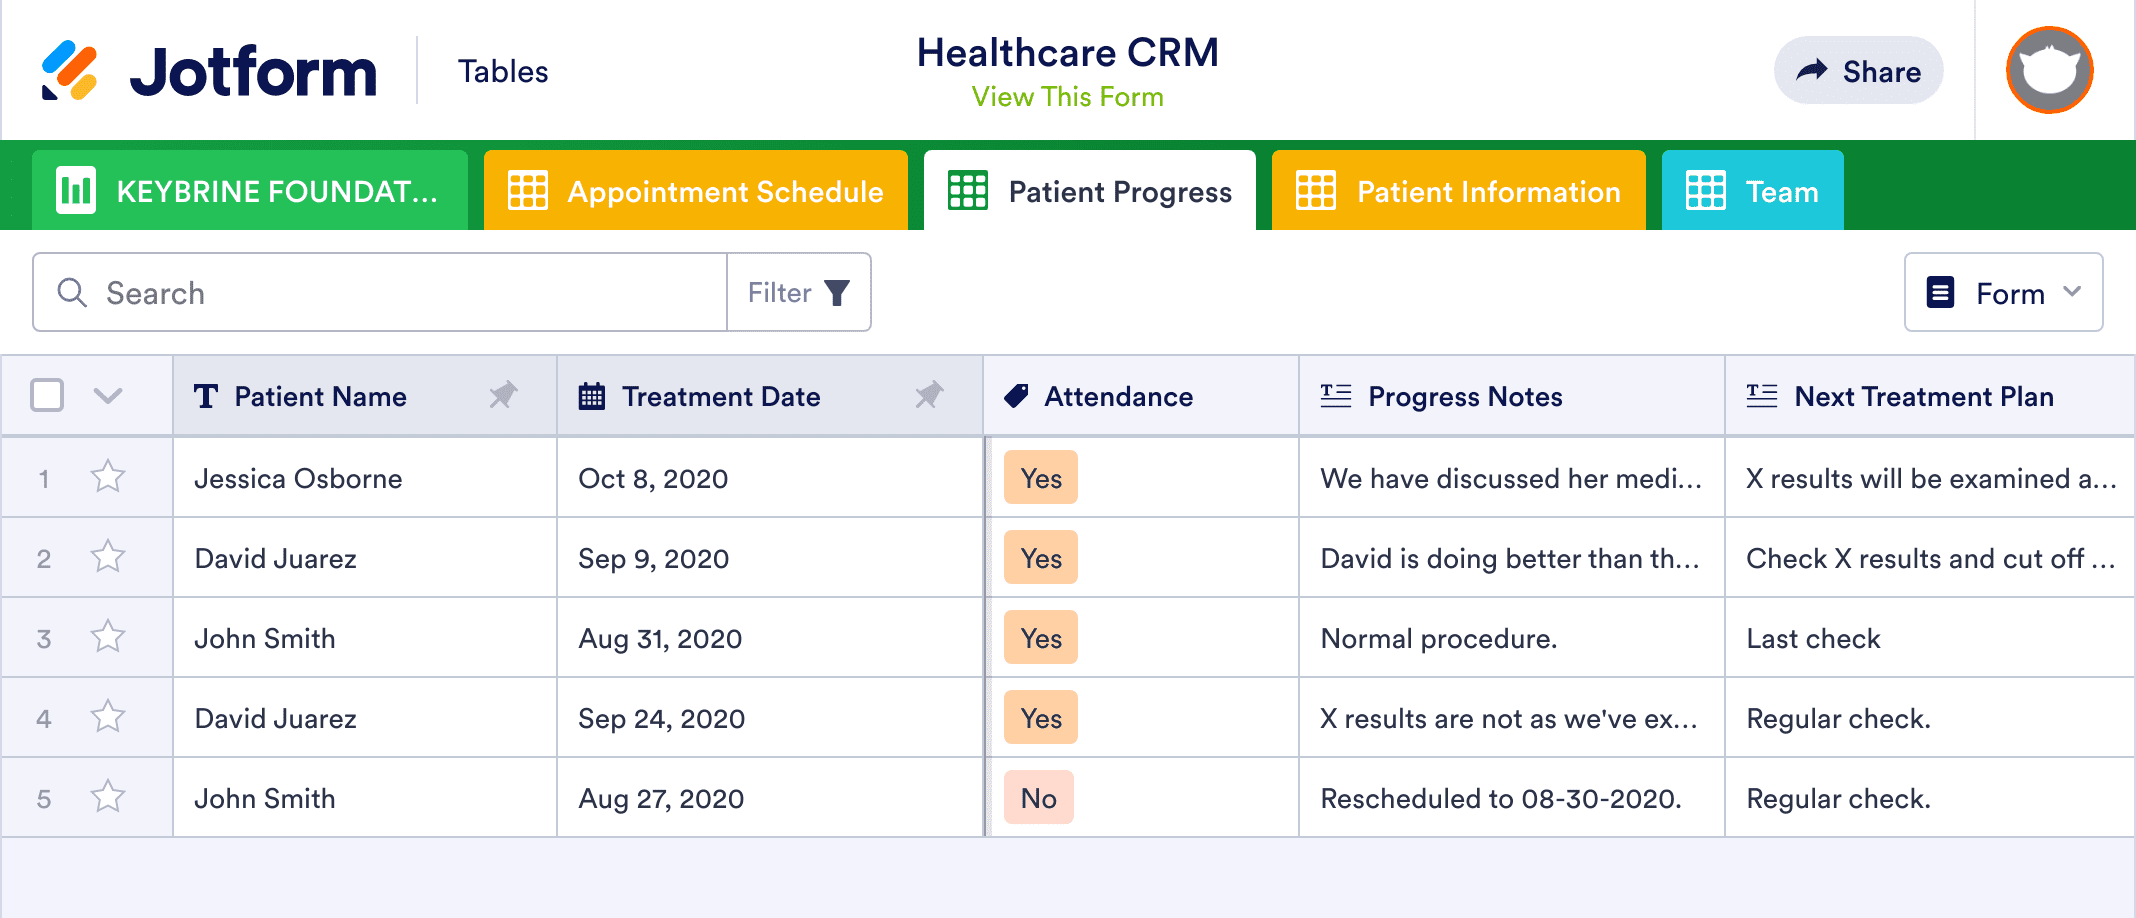 Healthcare CRM